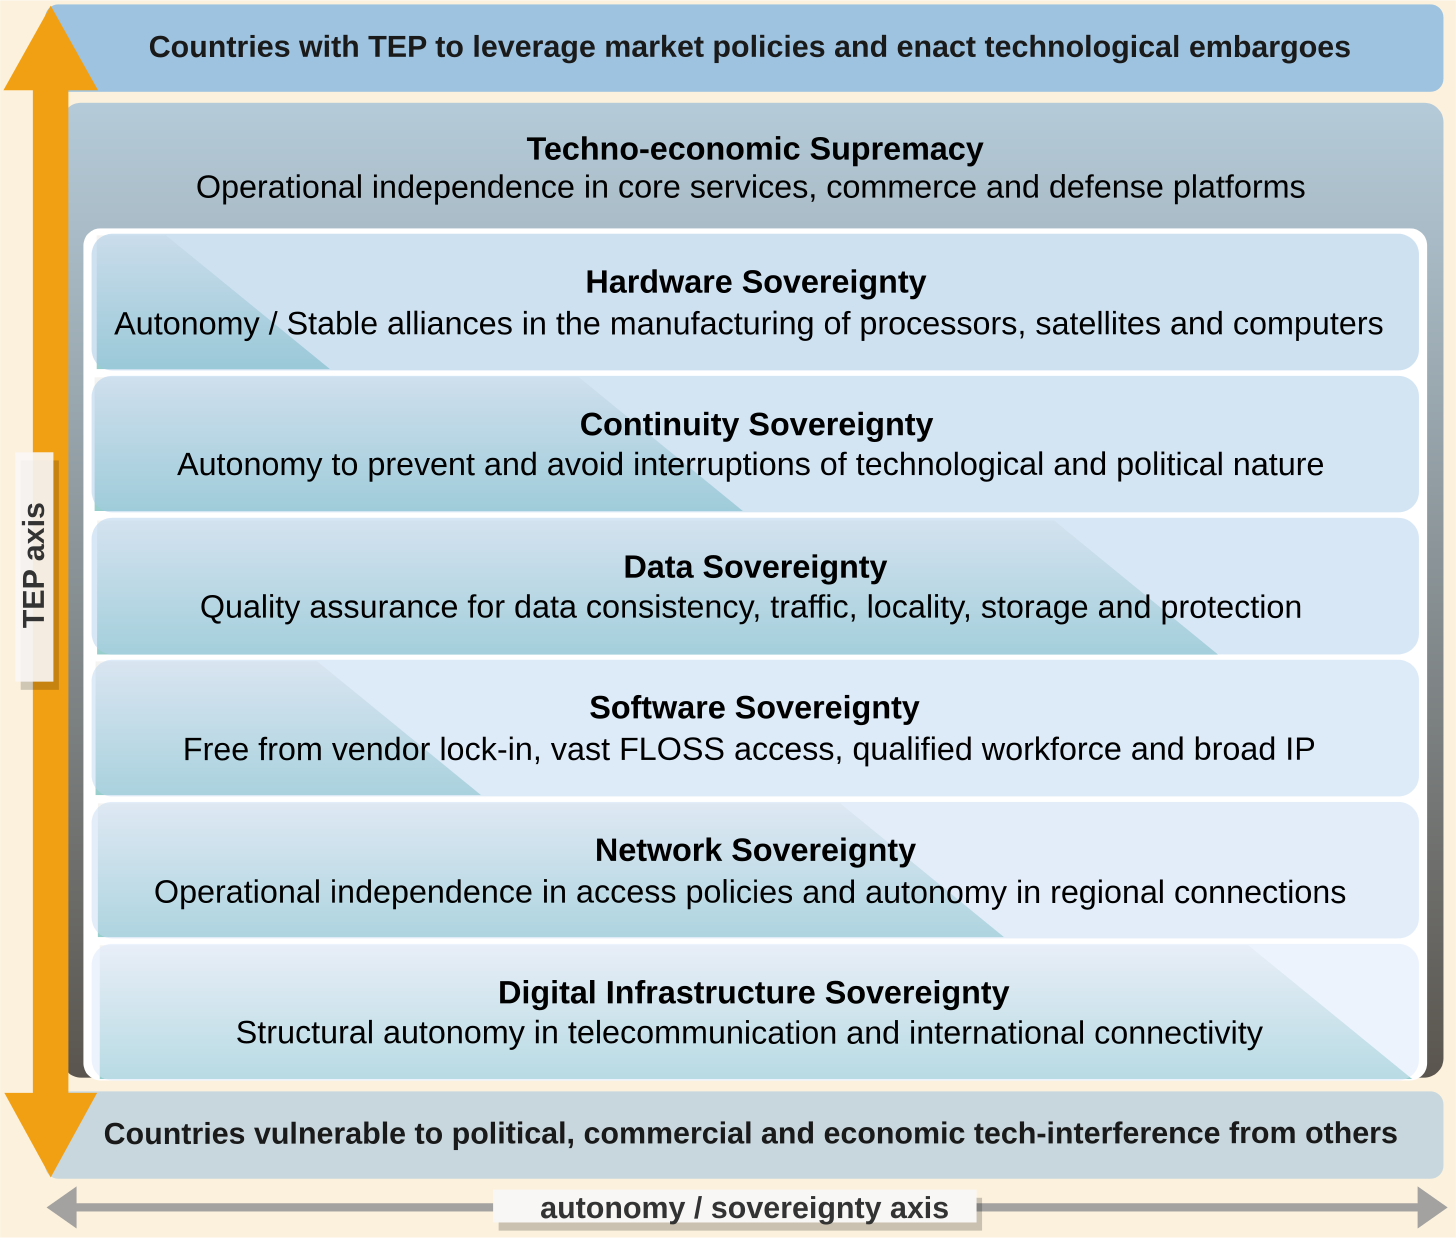 Pillars of the Techno-economic Supremacy